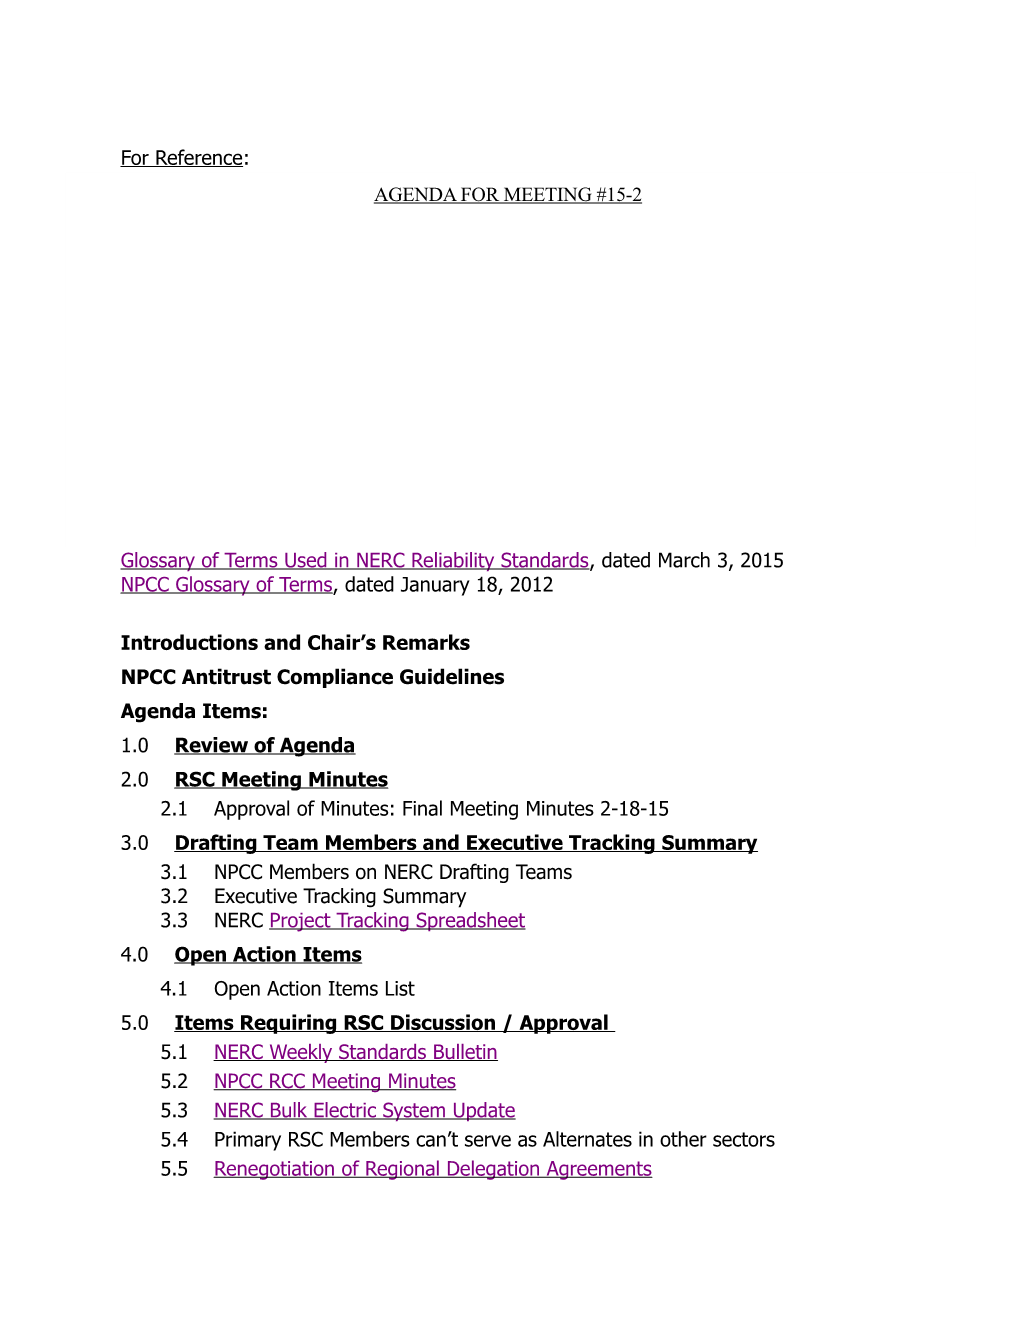 RSC Draft Meeting Agenda 4-22-15